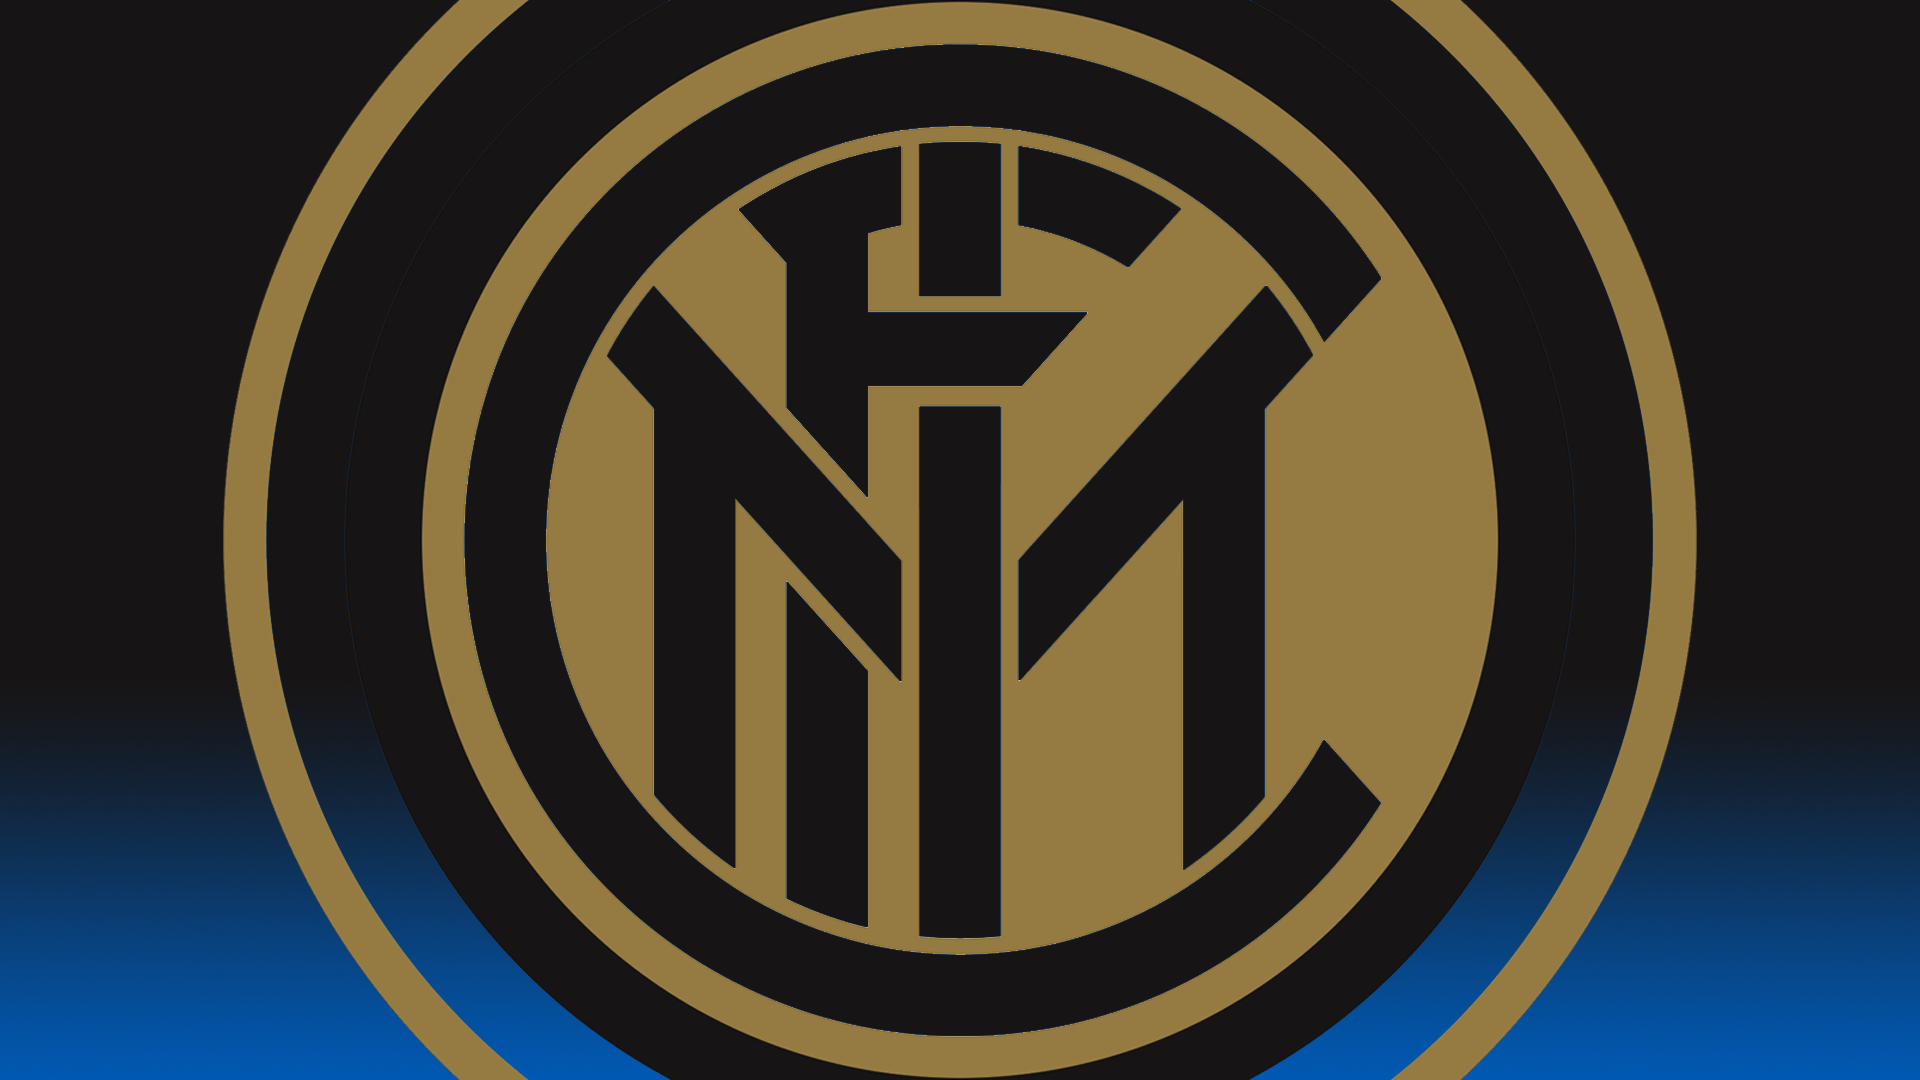 Emblem Inter Milan Logo Soccer 1920x1080